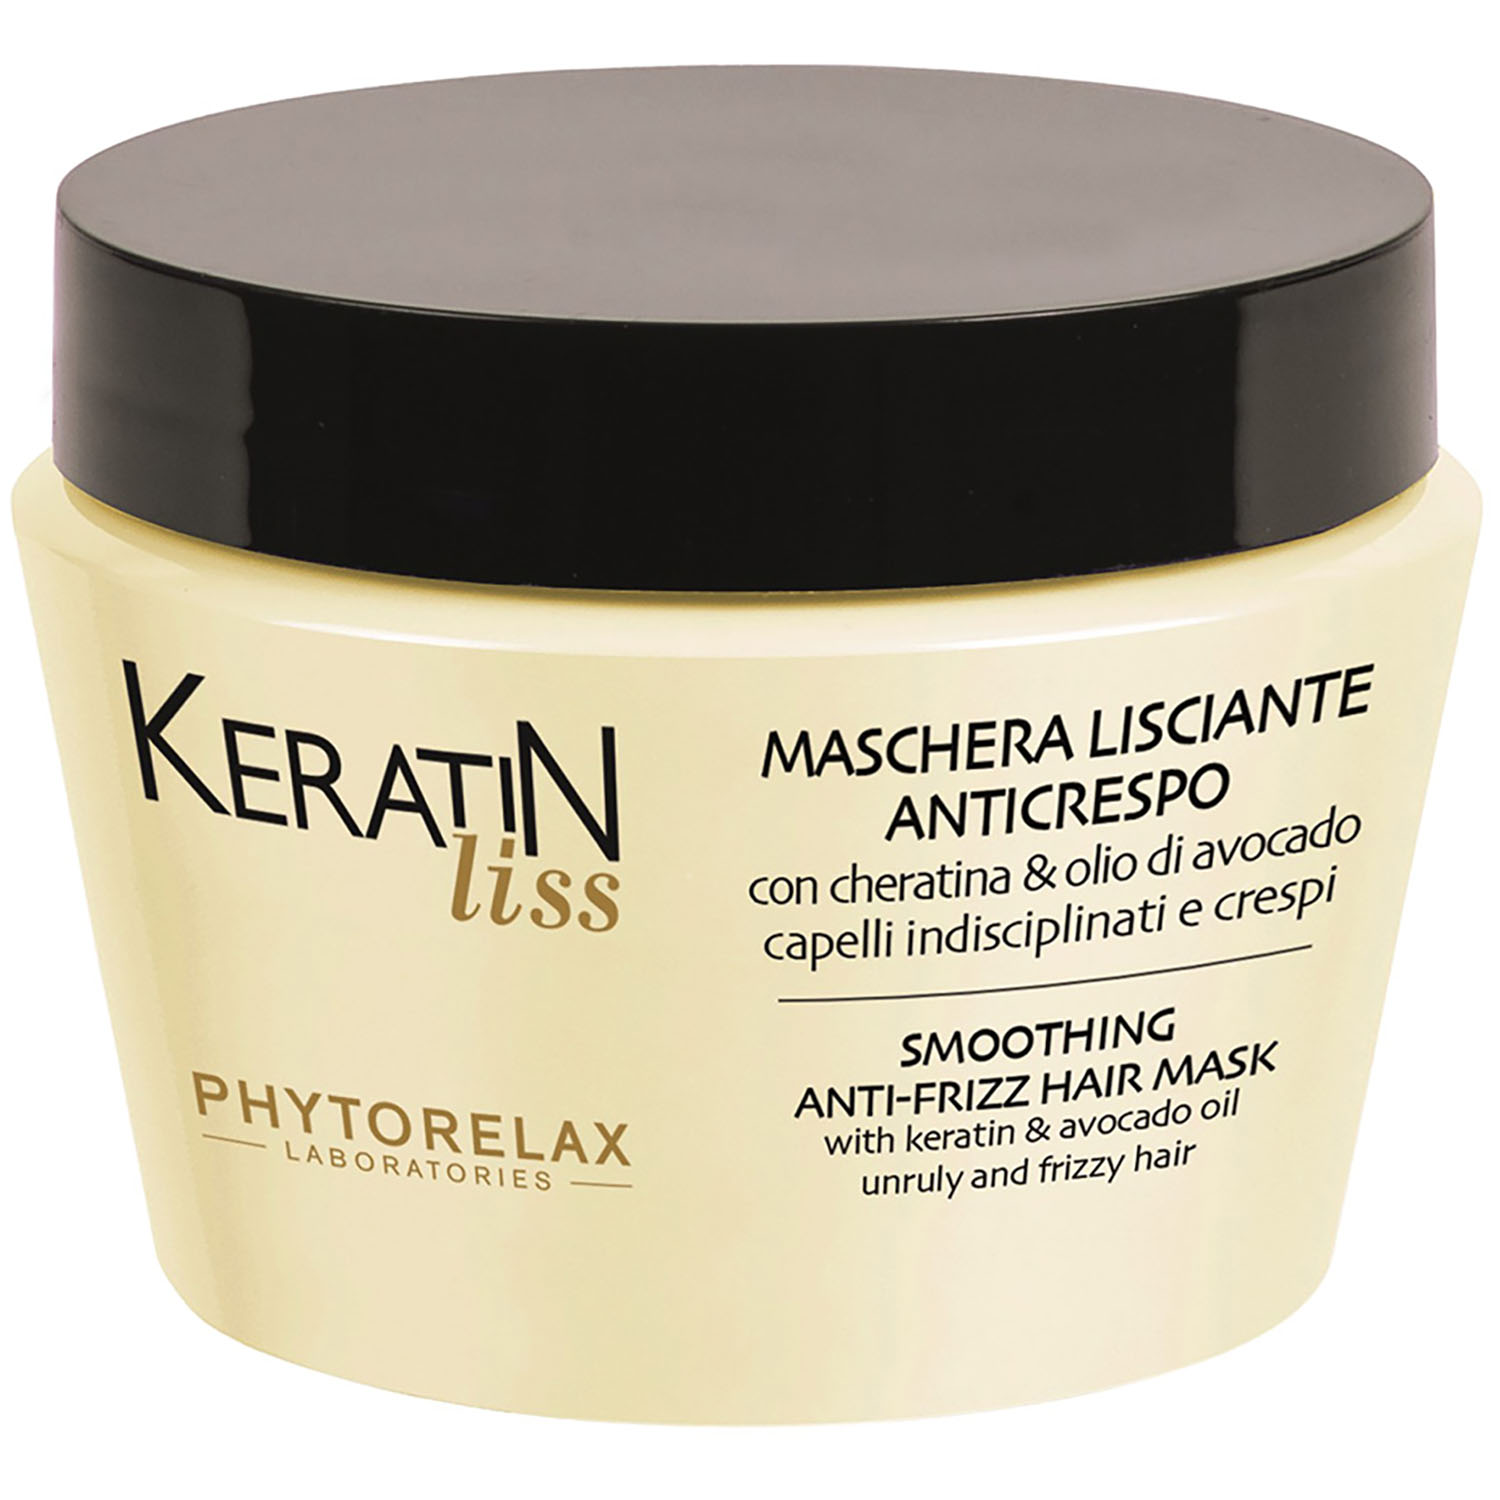 Маска Phytorelax Laboratories Keratin Liss Smoothing Anti-Frizz Hair Mask для разглаживания волос 250 мл - фото 1